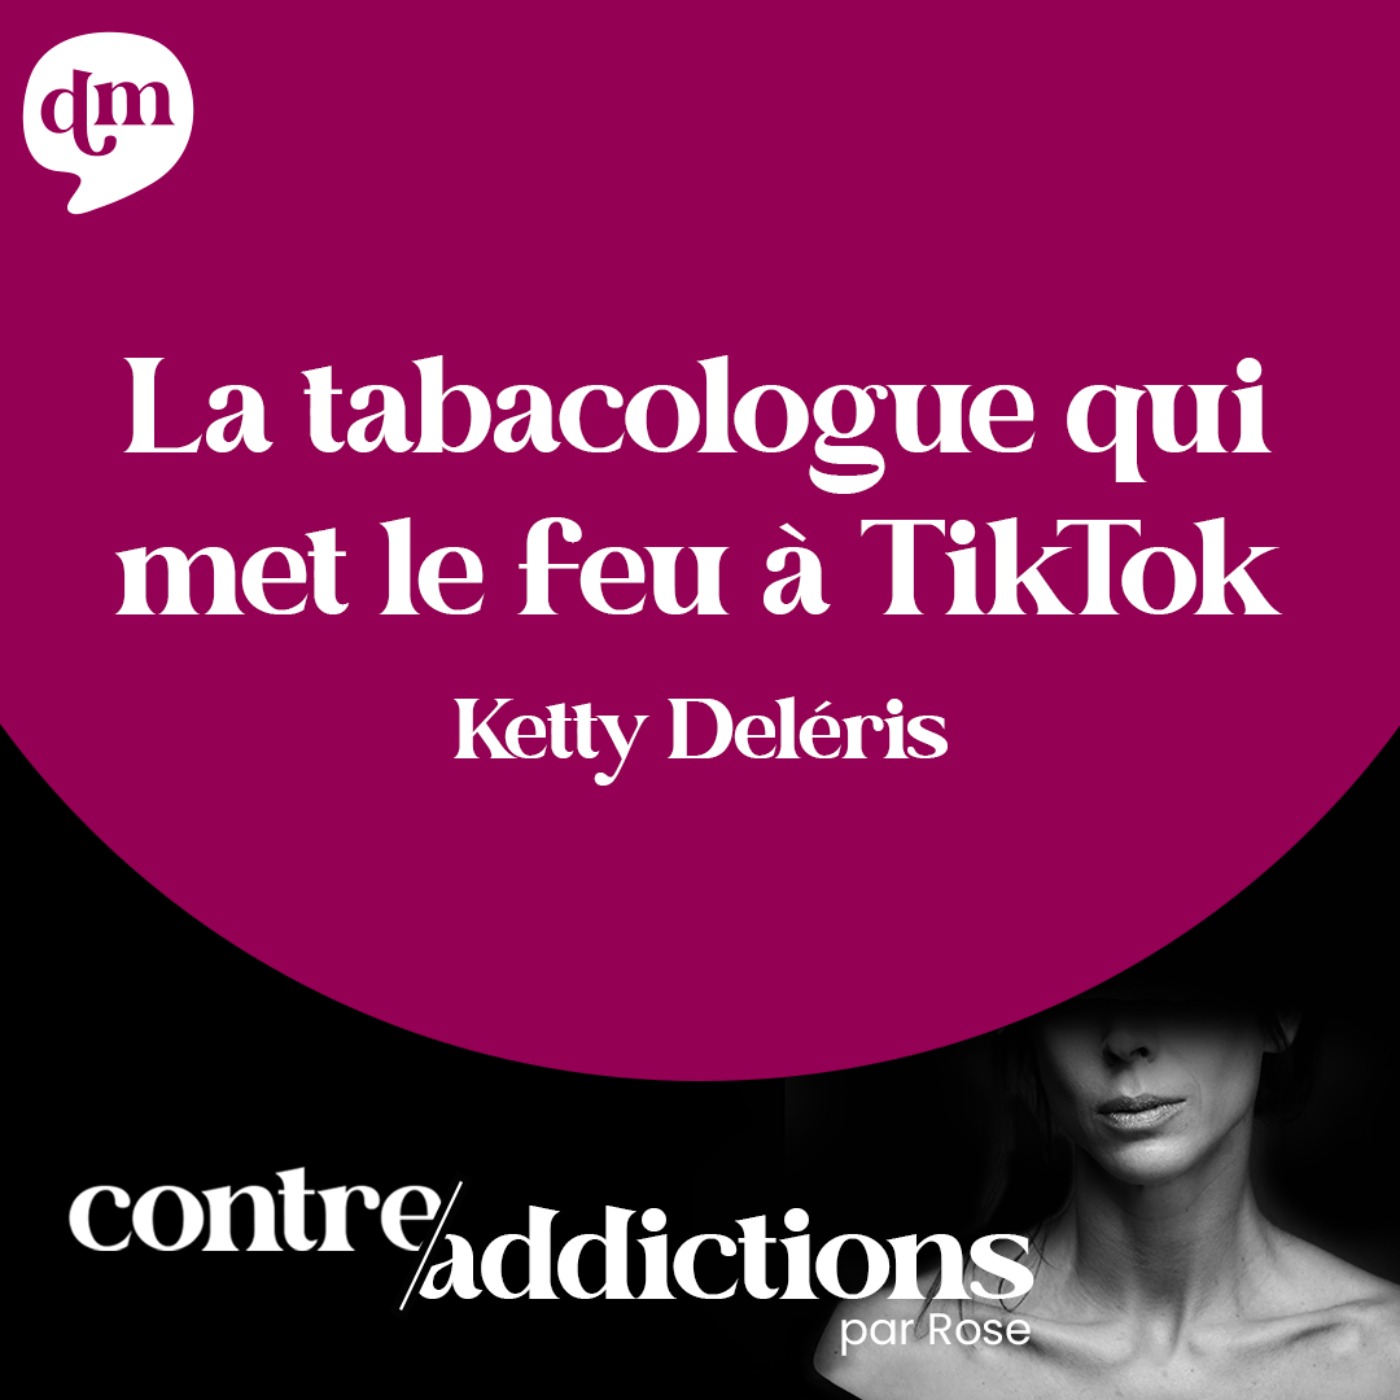 S2E5 - La tabacologue qui met le feu à TikTok : Ketty Deléris